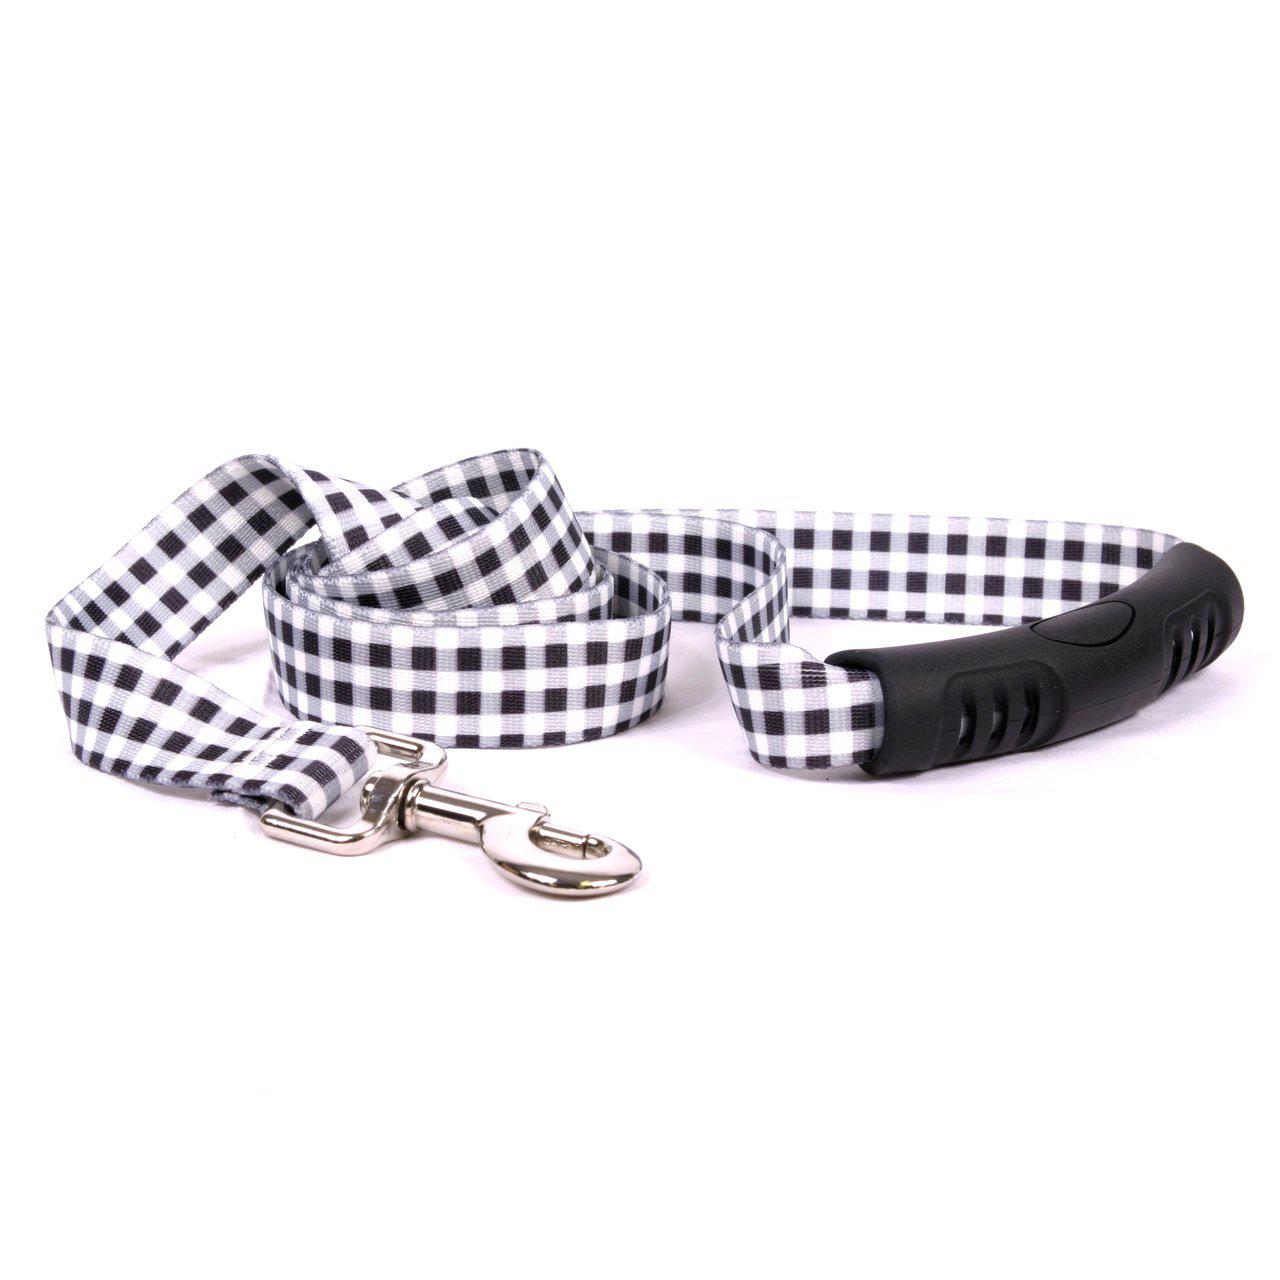 yellow dog design gingham black ez-grip dog leash with comfort handle, small/medium